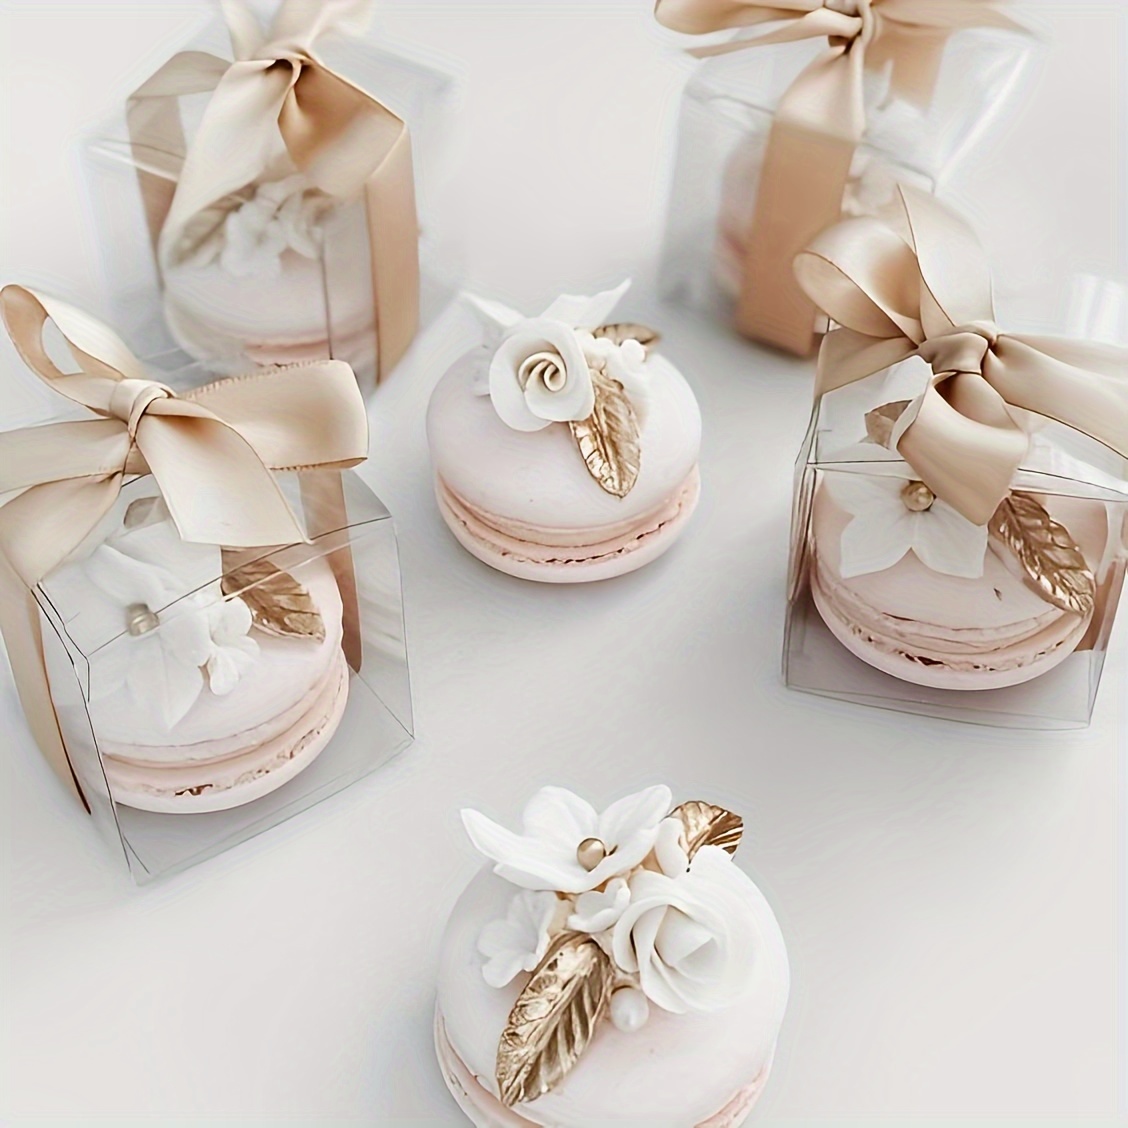 50pcs Mini Wedding Favor Box, Gift Boxes Candy Boxes with Gift Ribbons for Wedding Party Favor Party Decoration, Gold